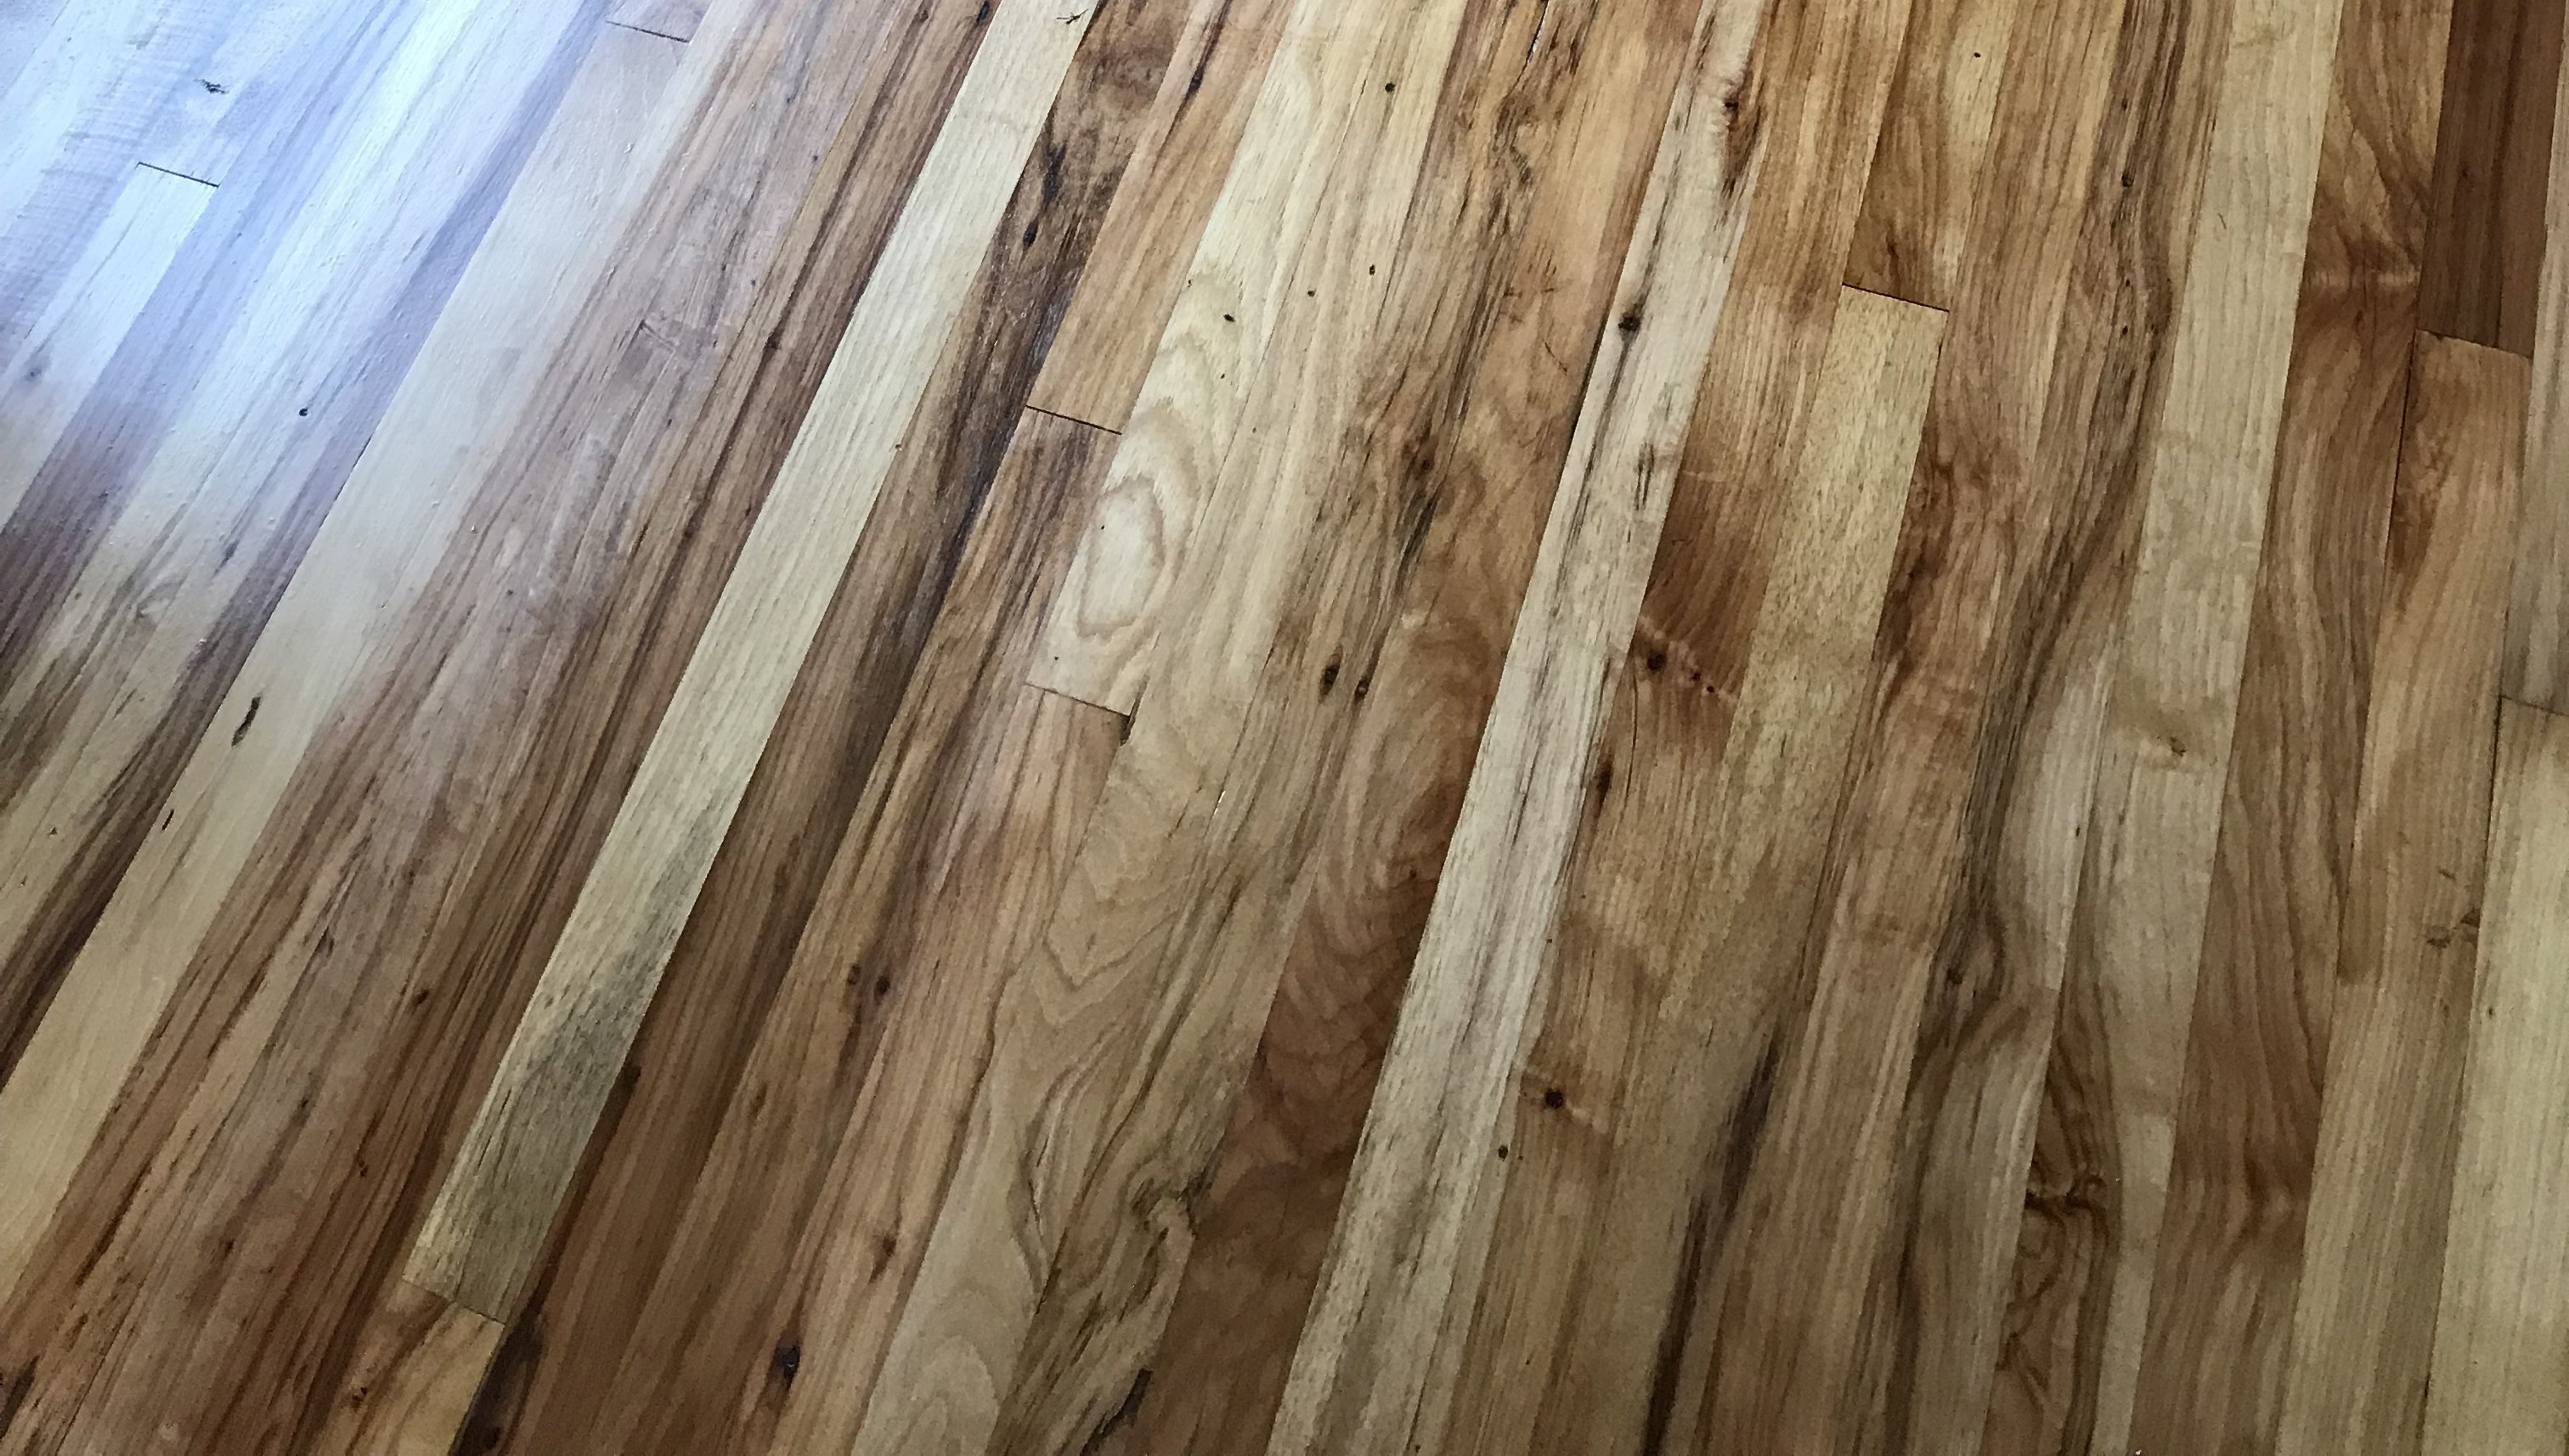 how long does refinishing hardwood floors take of refinishing hardwood floors carlhaven made regarding refinishing hardwood floors